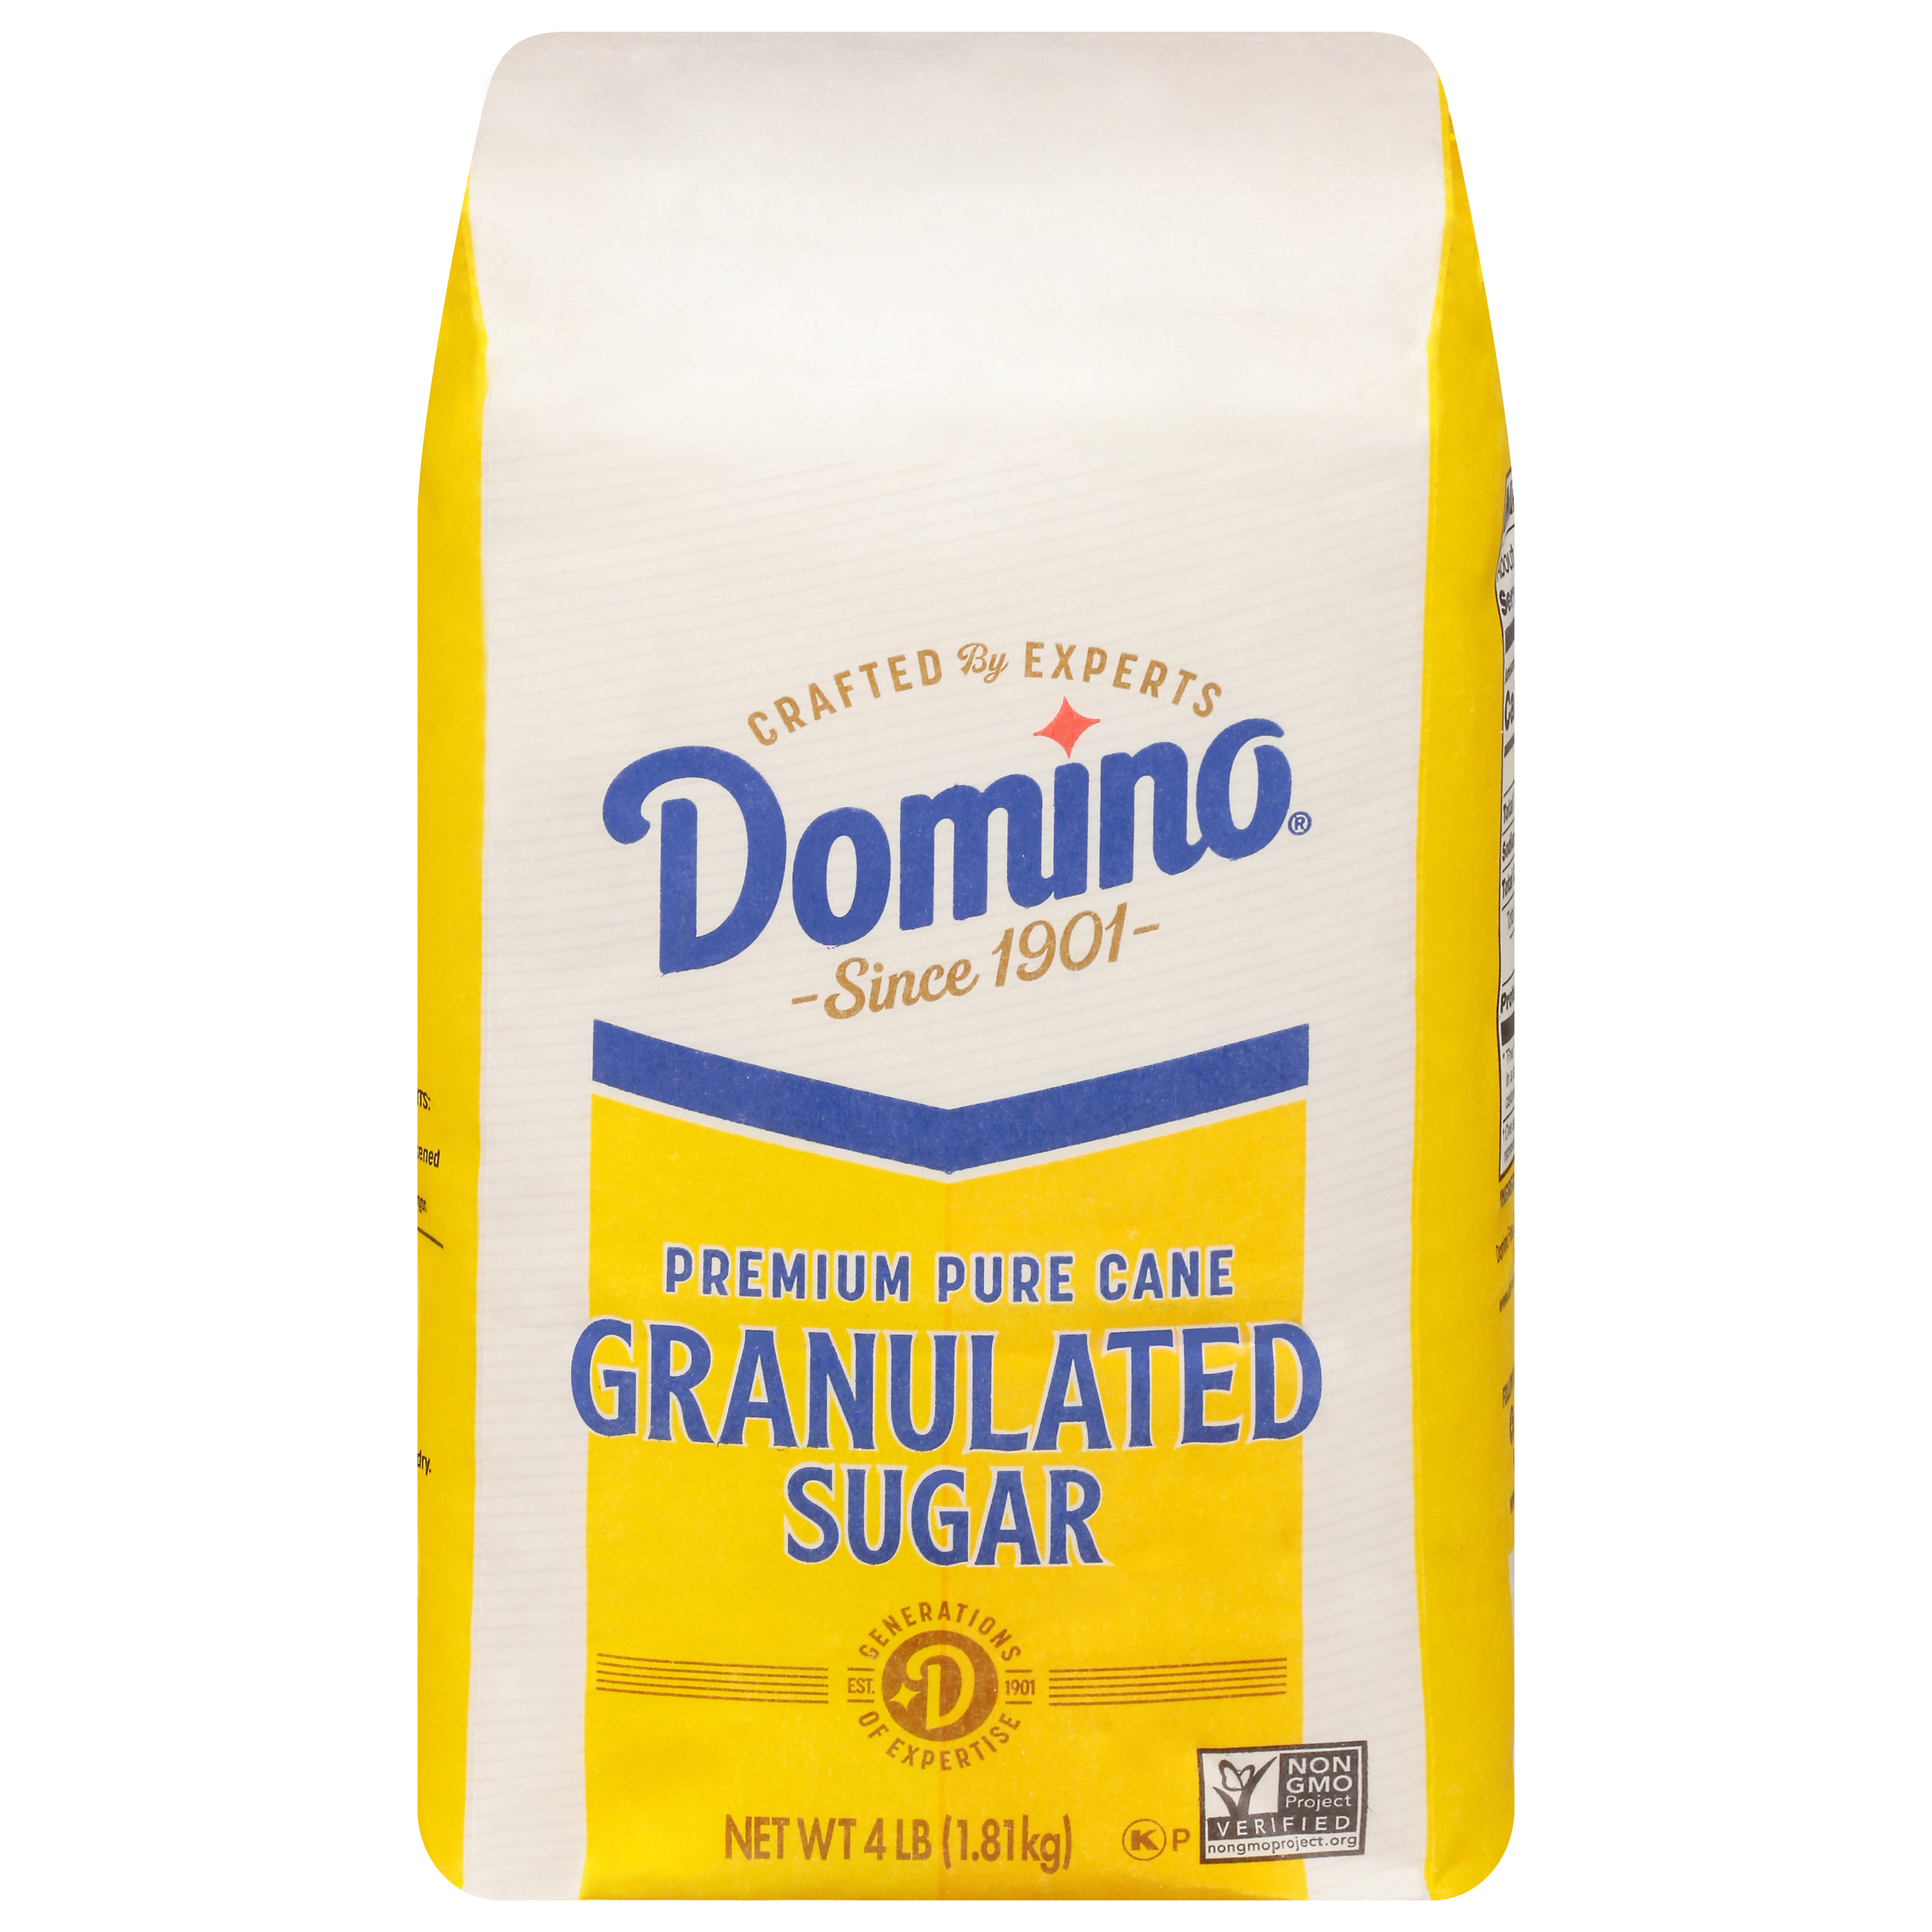 Domino® Premium Pure Cane Granulated Sugar, 4 lb - image 1 of 9